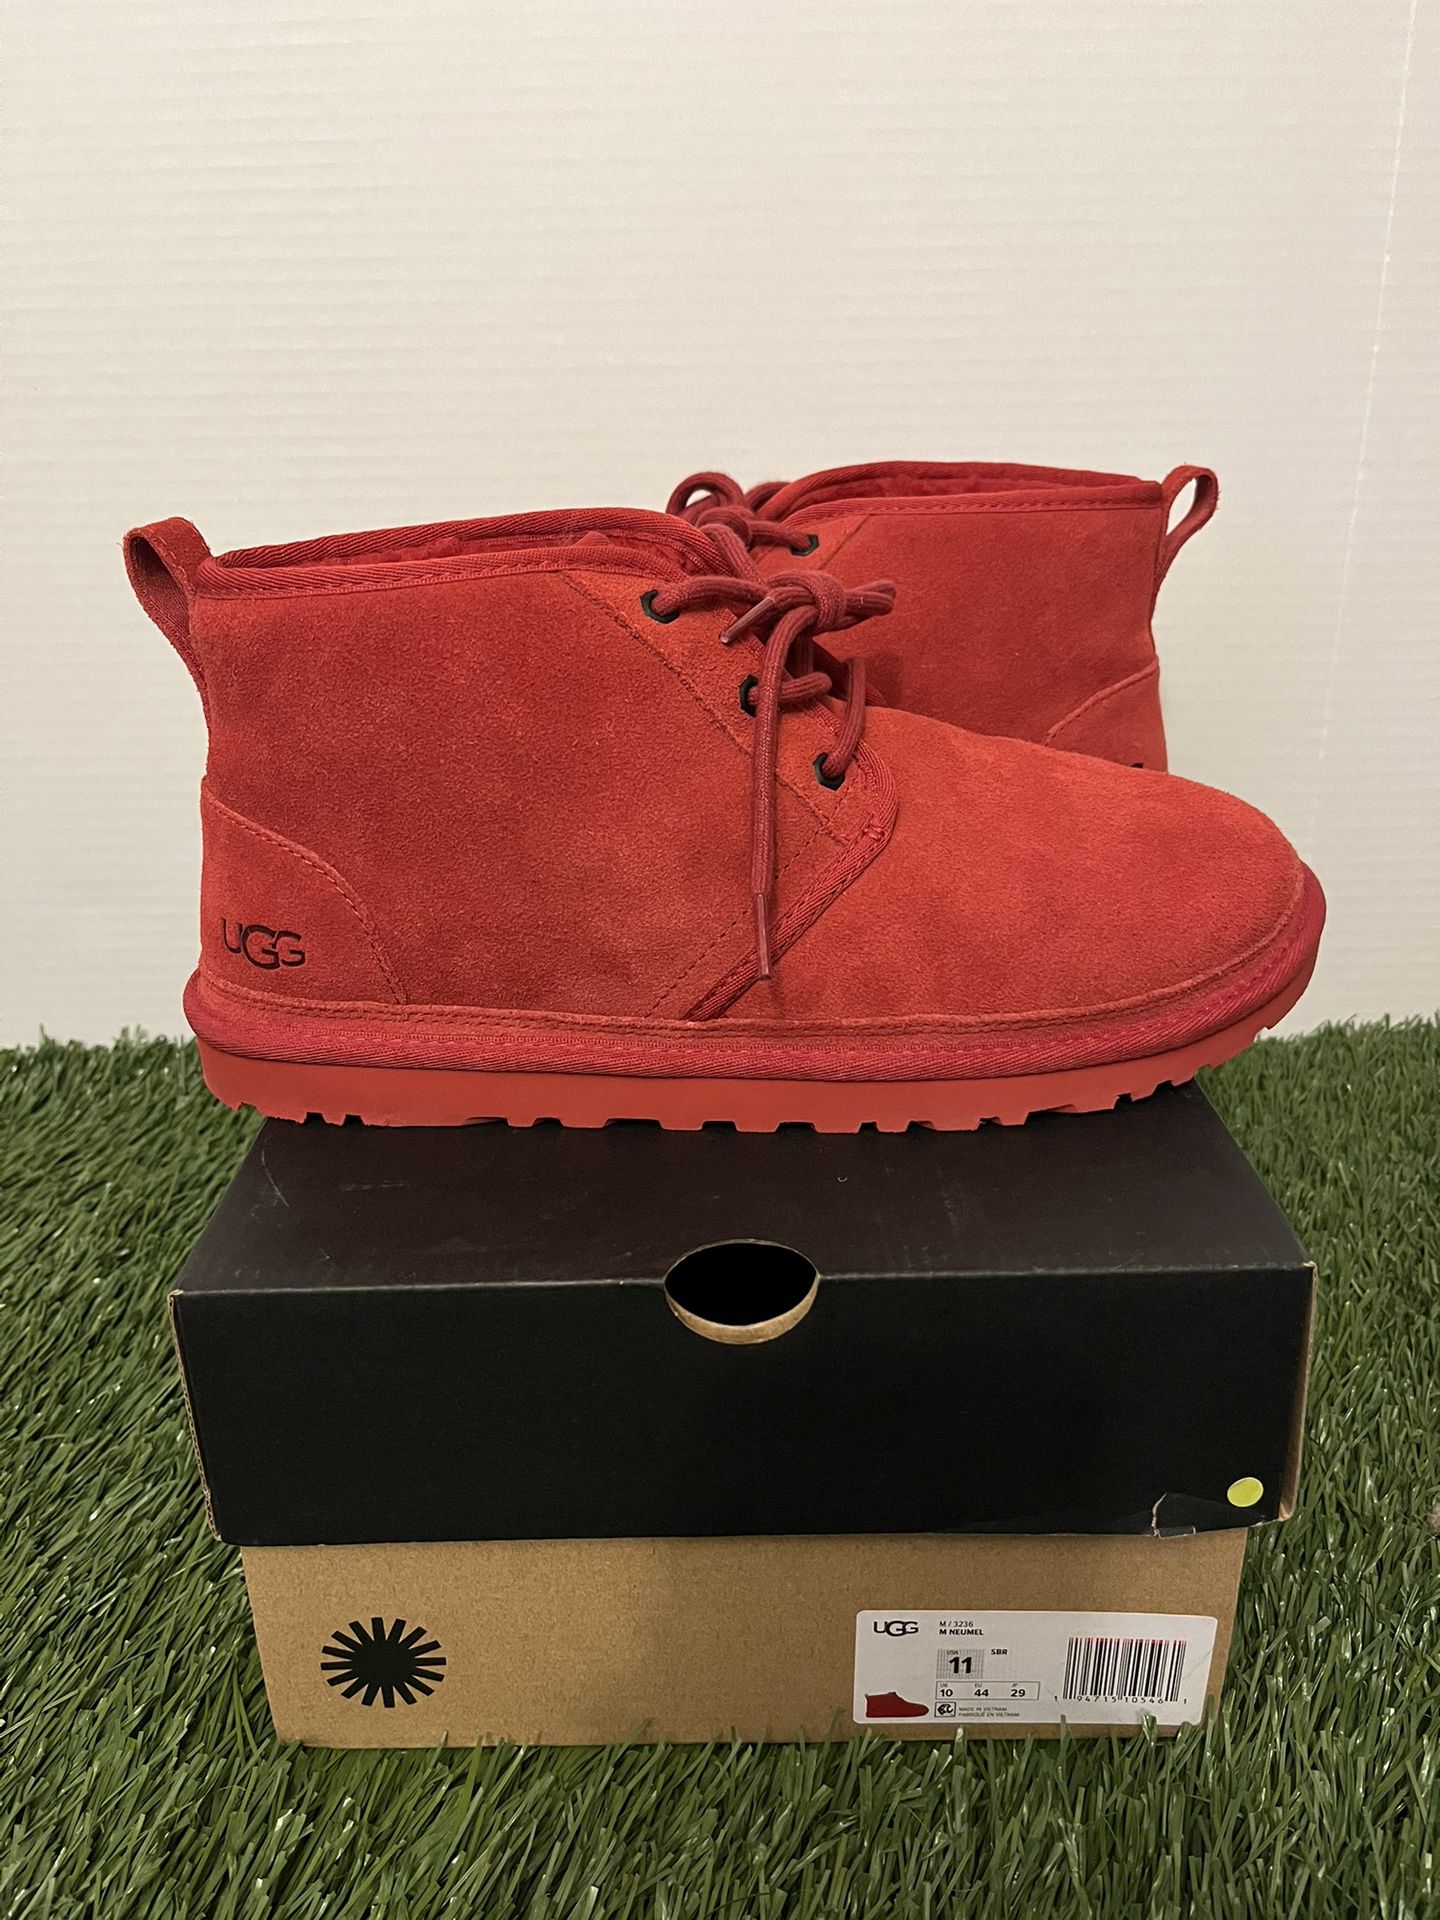 Ugg Neumel Boot ‘Samba Red’ Size 11